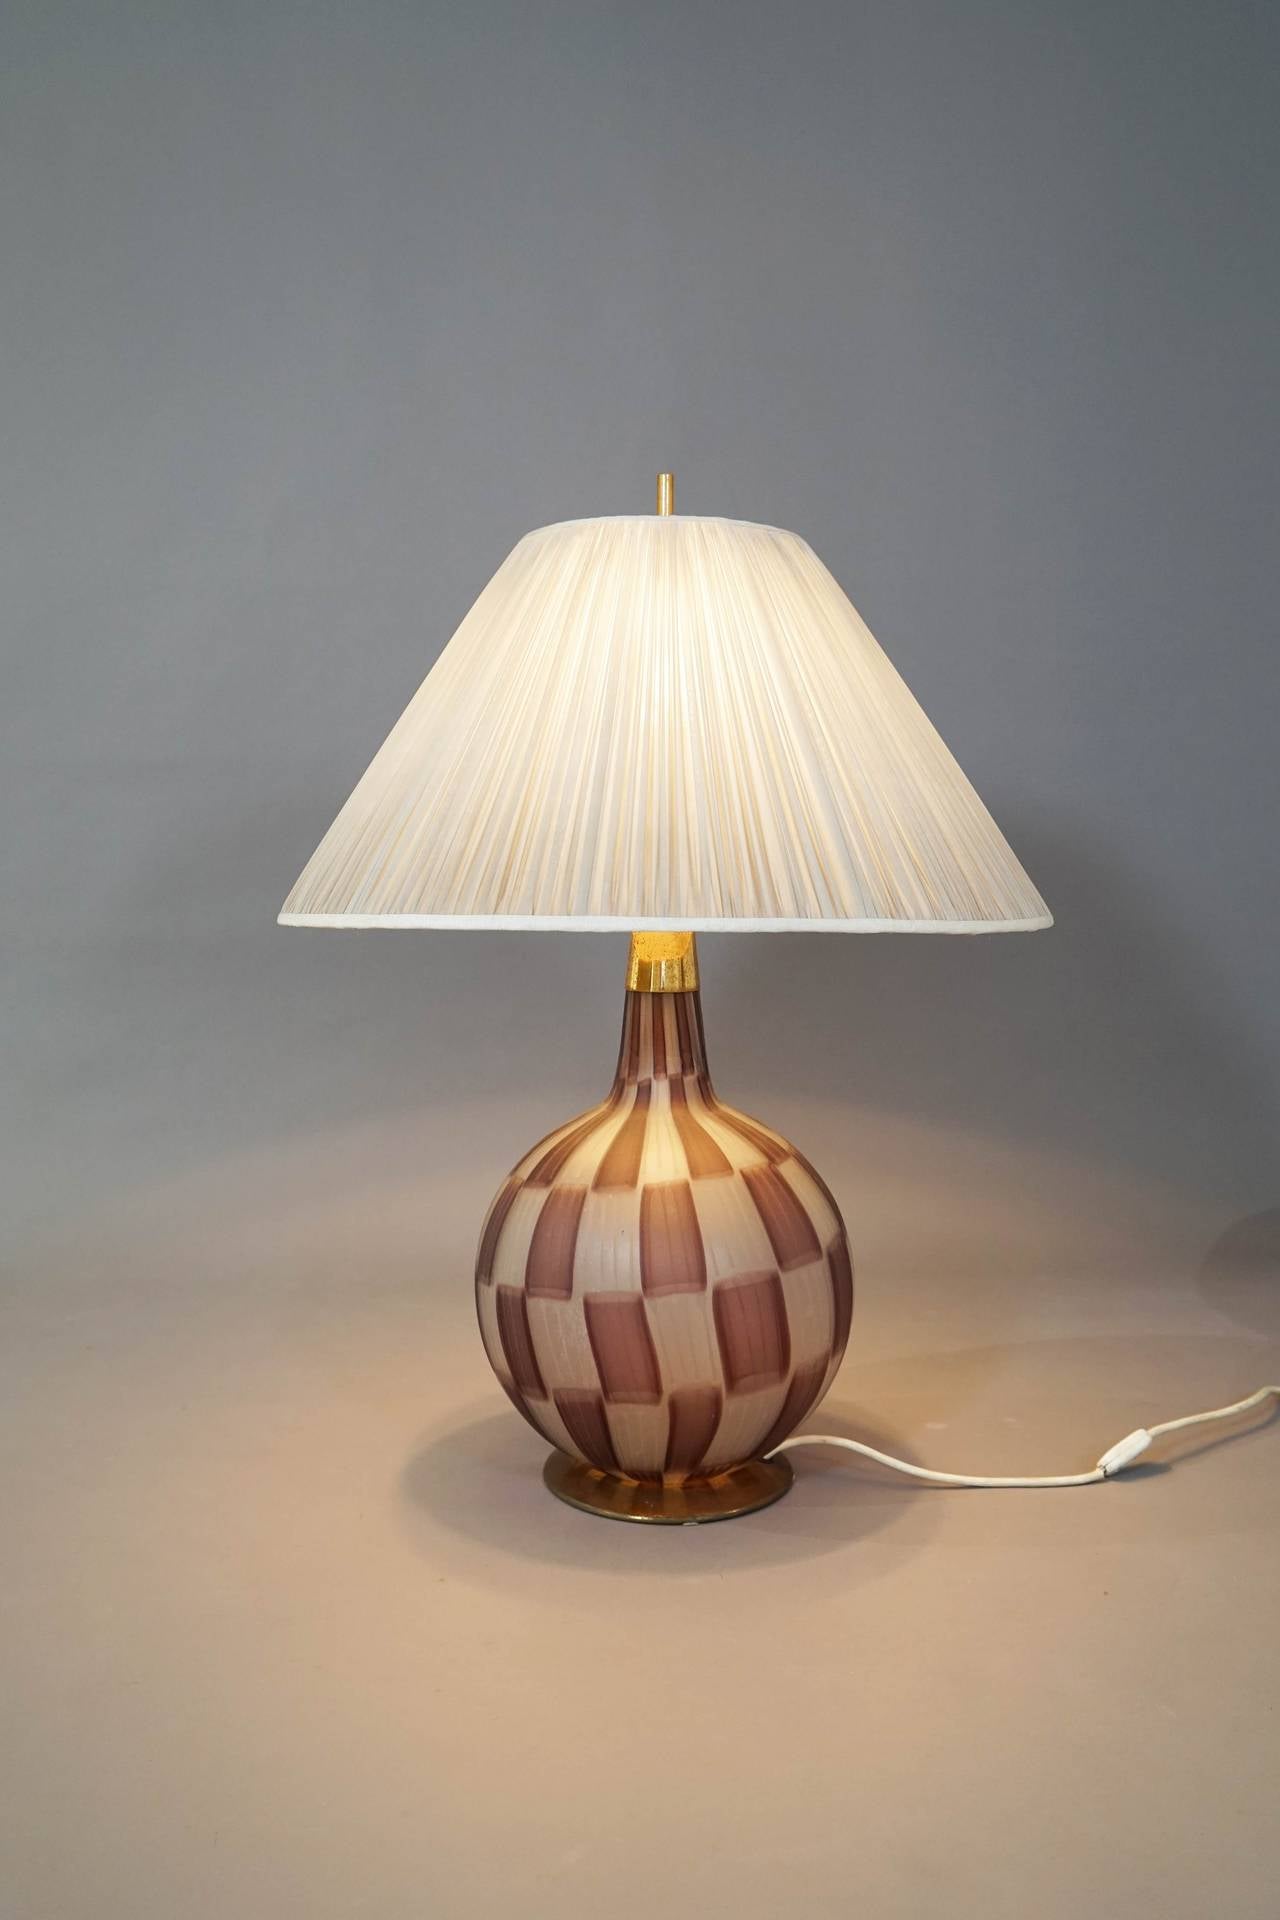 Table Lamp by Tea Morosati, Stilnovo. Barovier + Toso, Italy ca. 1950

with original label

adjustable light opportunities